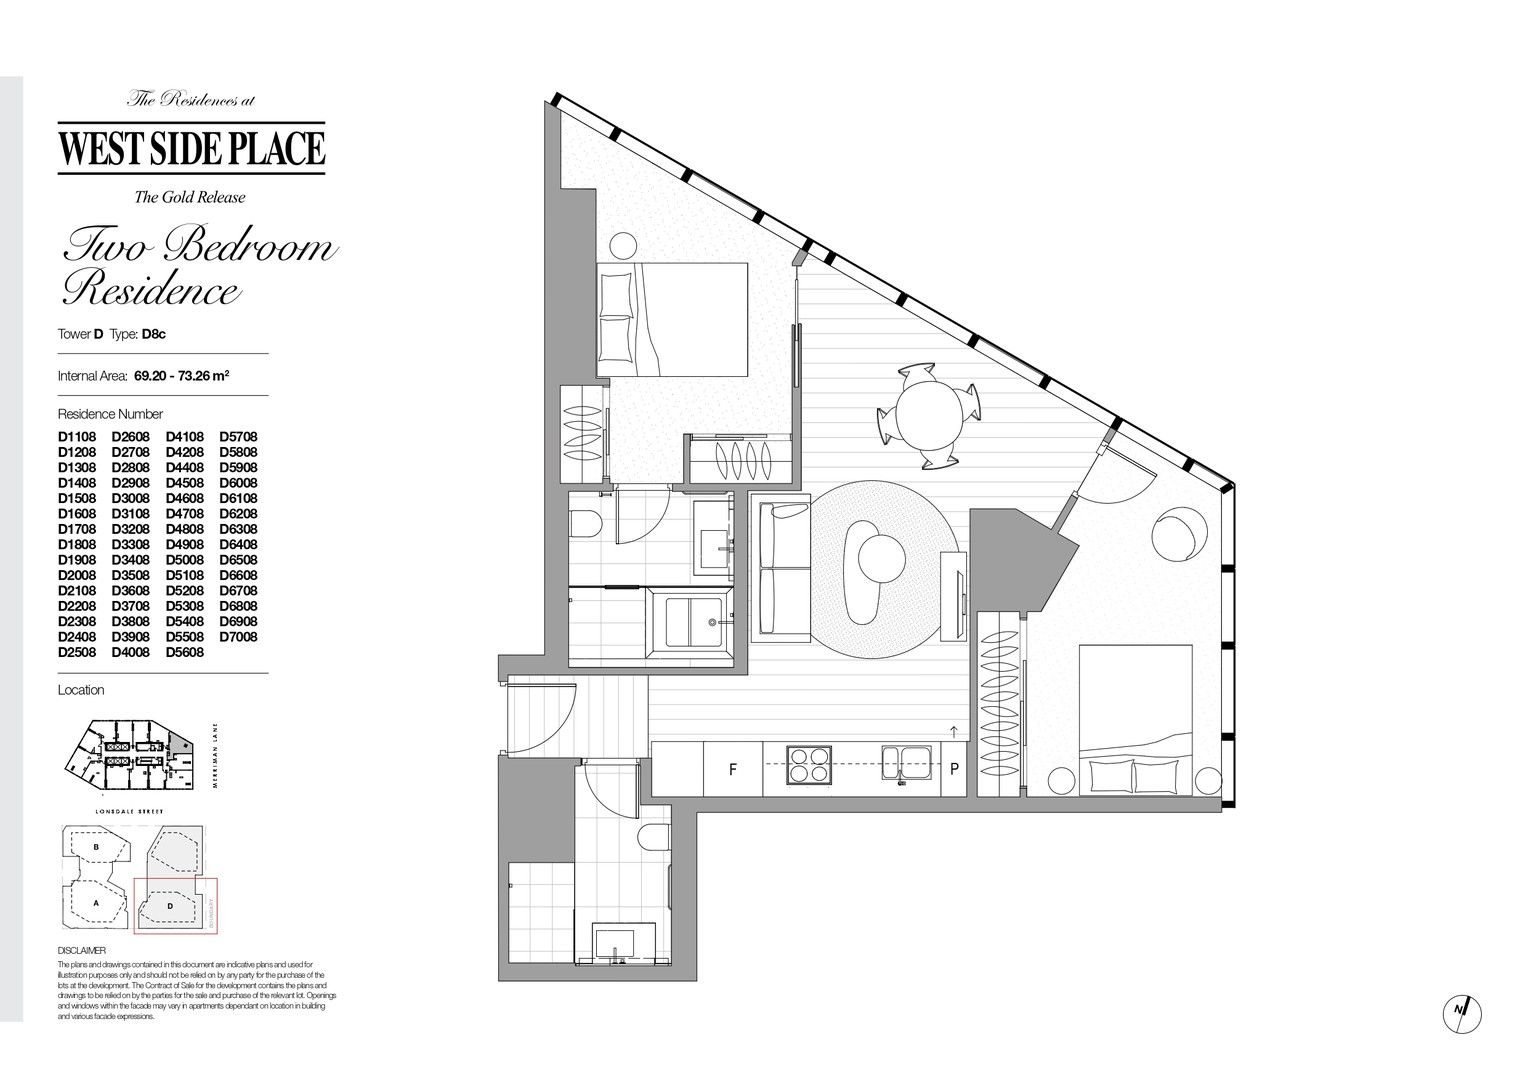 2 bedrooms Apartment / Unit / Flat in 651-669 Lonsdale St MELBOURNE VIC, 3000